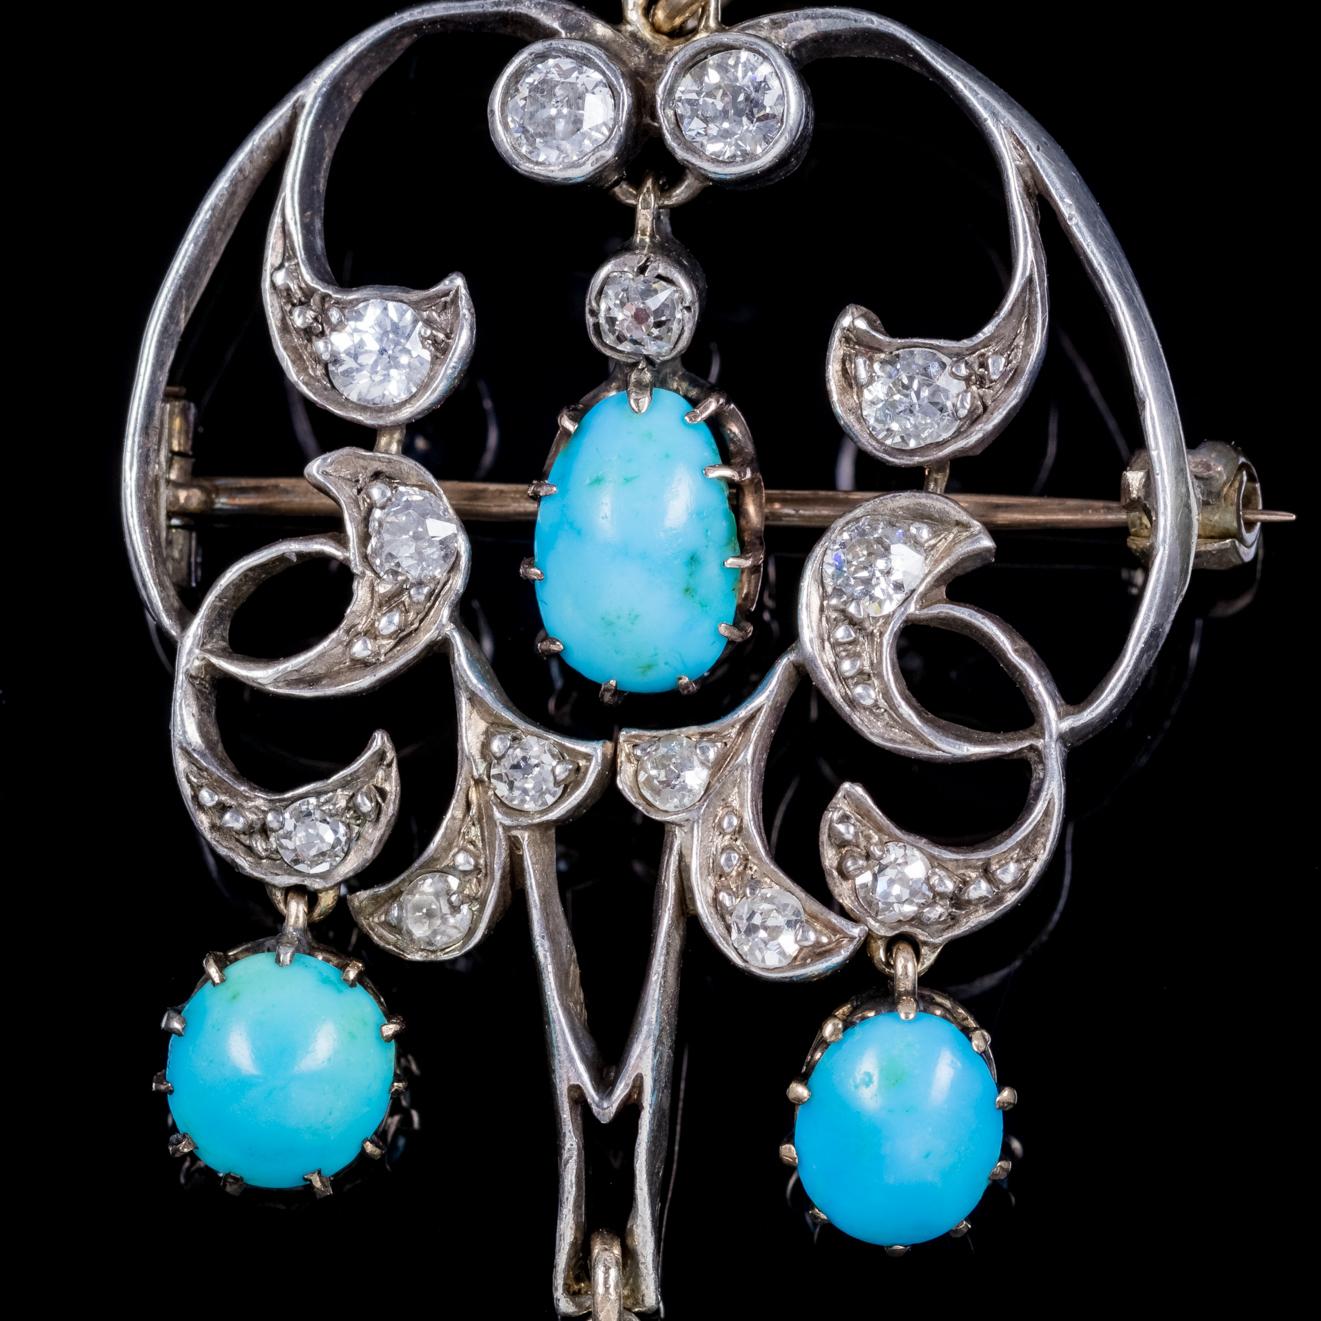 Antique Victorian Turquoise Diamond Dropper Pendant Brooch, circa 1860 For Sale 1